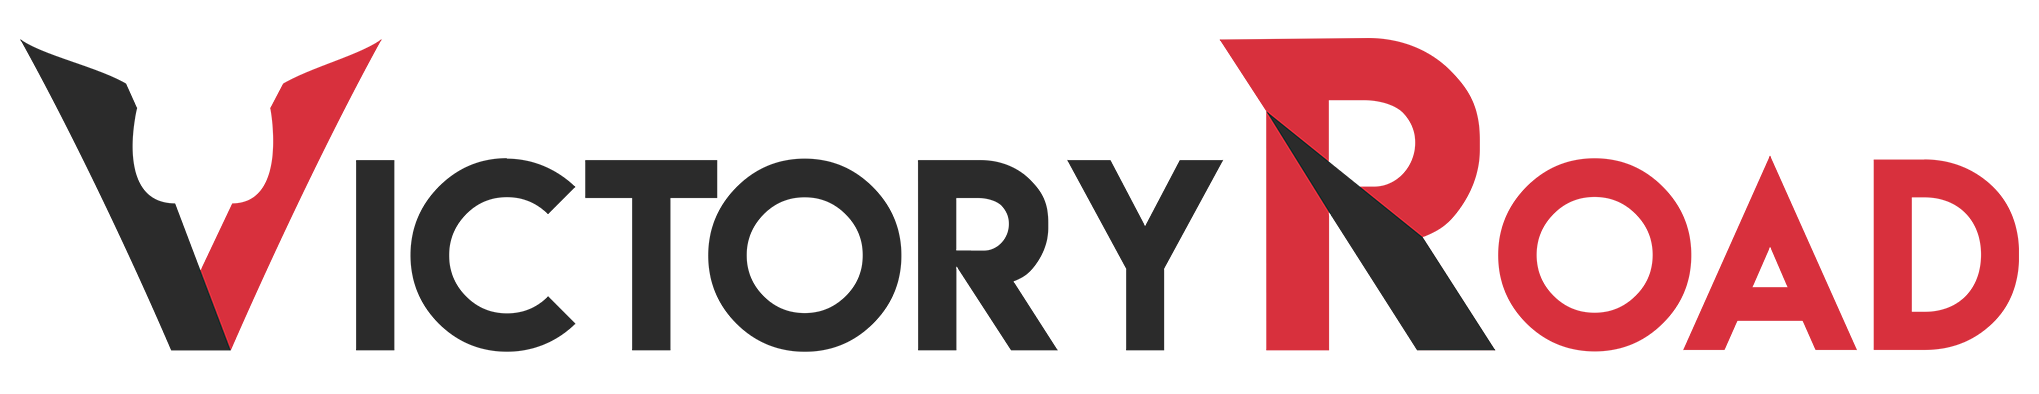 Logo Victory Road